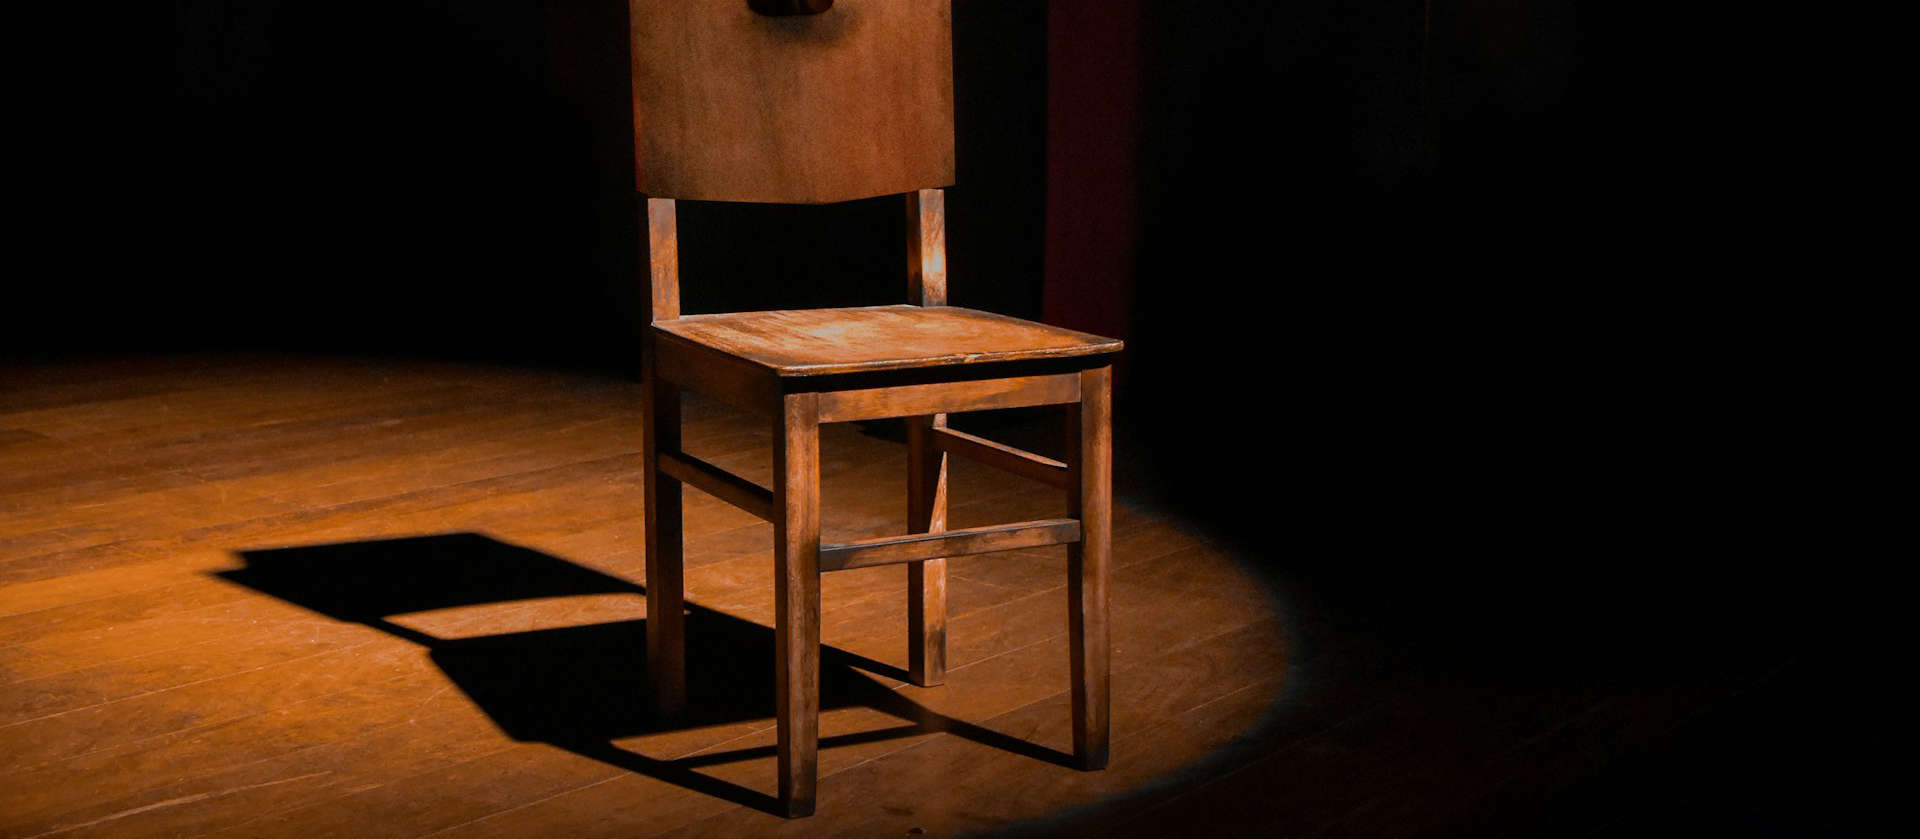 spotlit empty chair on a dark stage